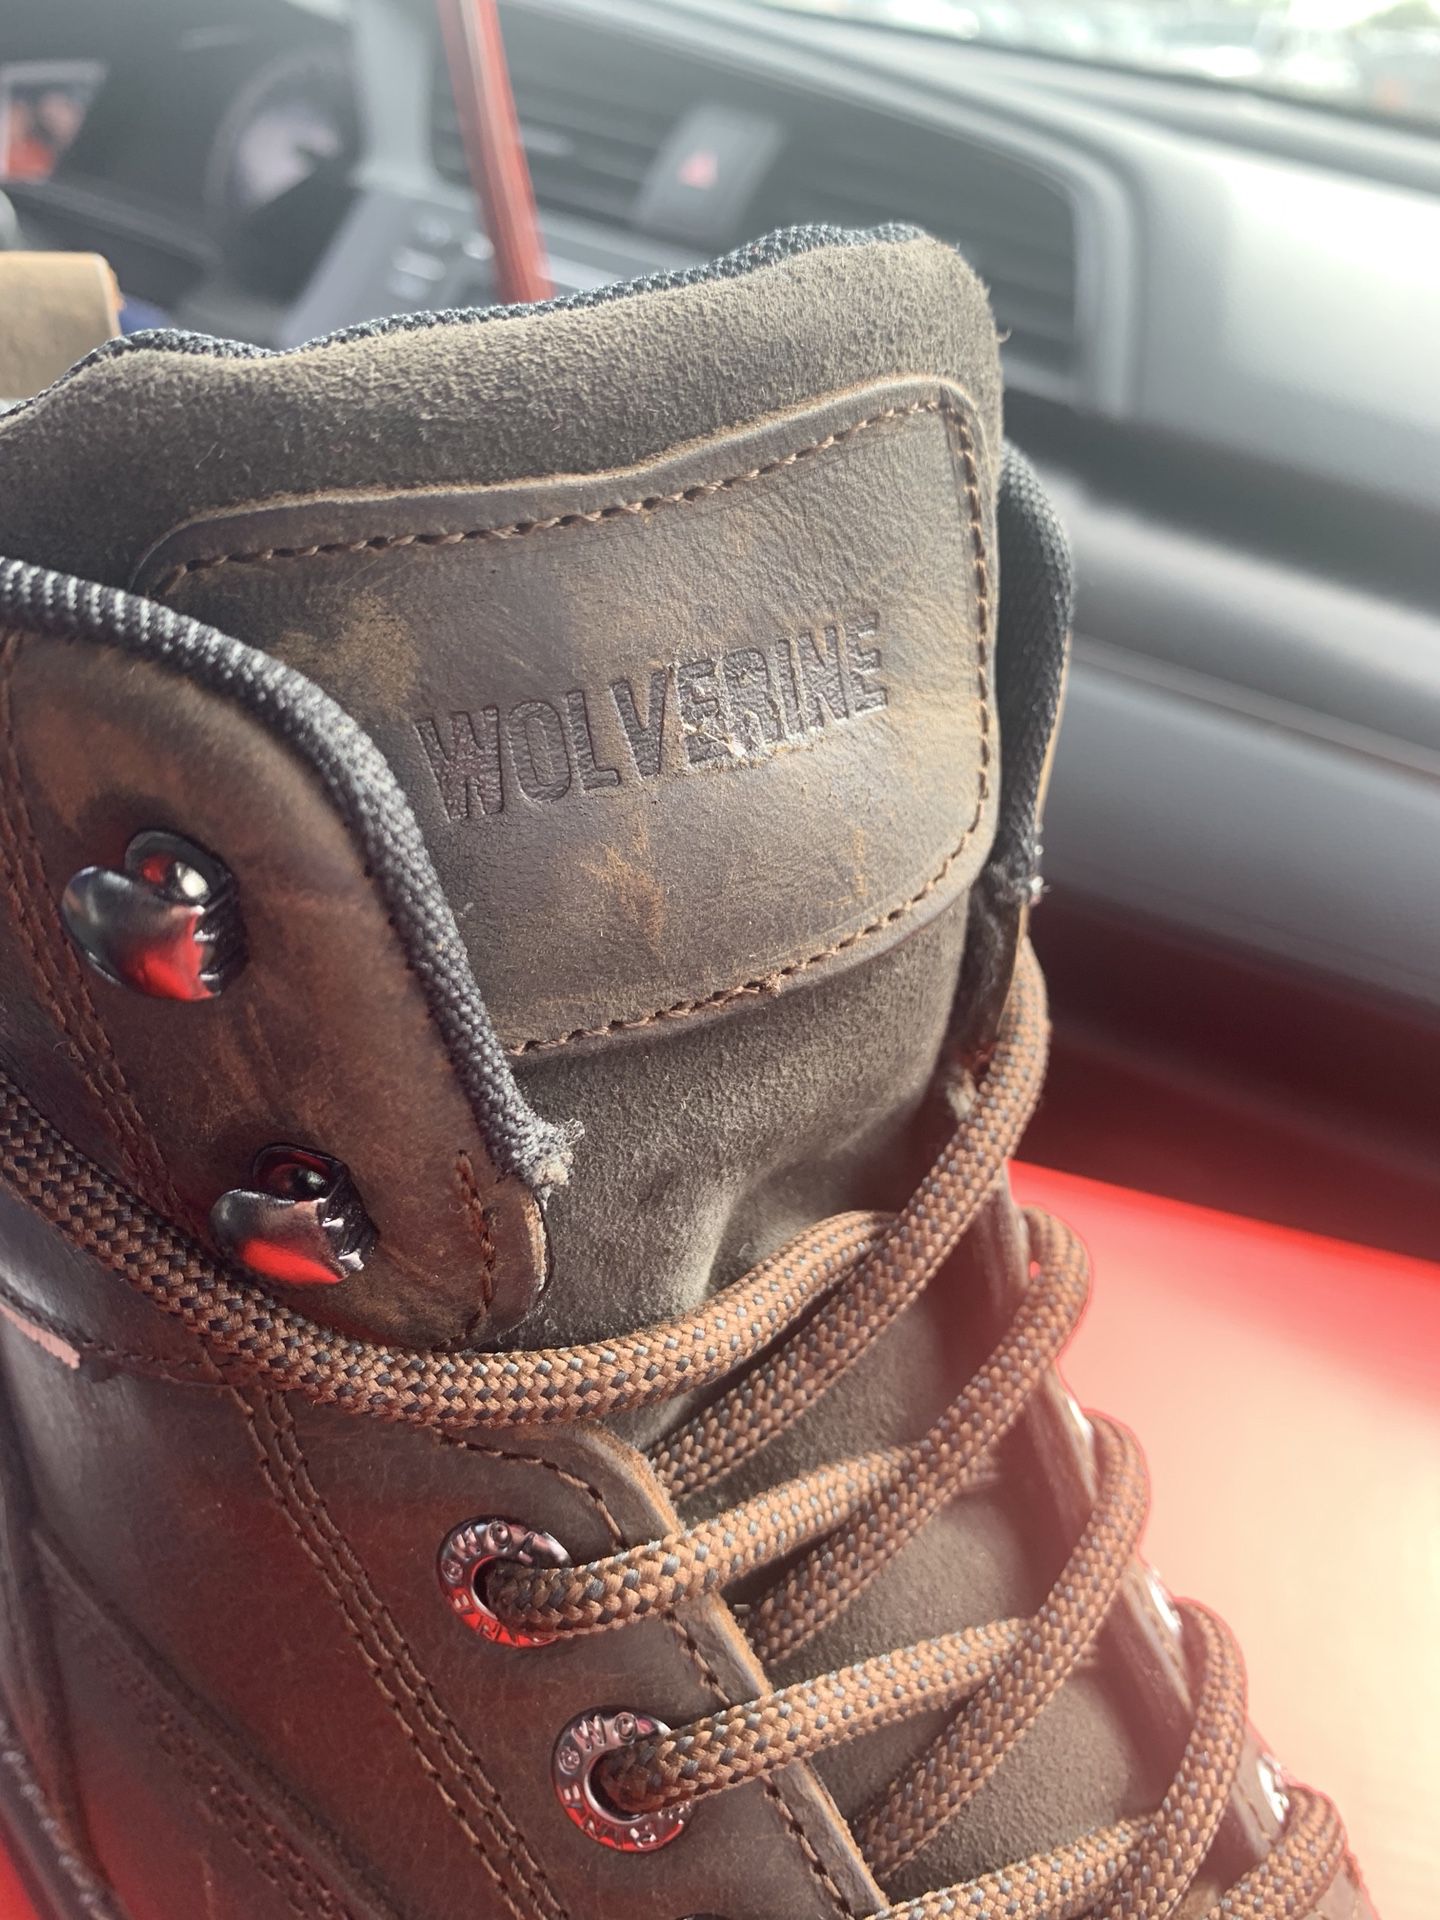 Wolverine boots!